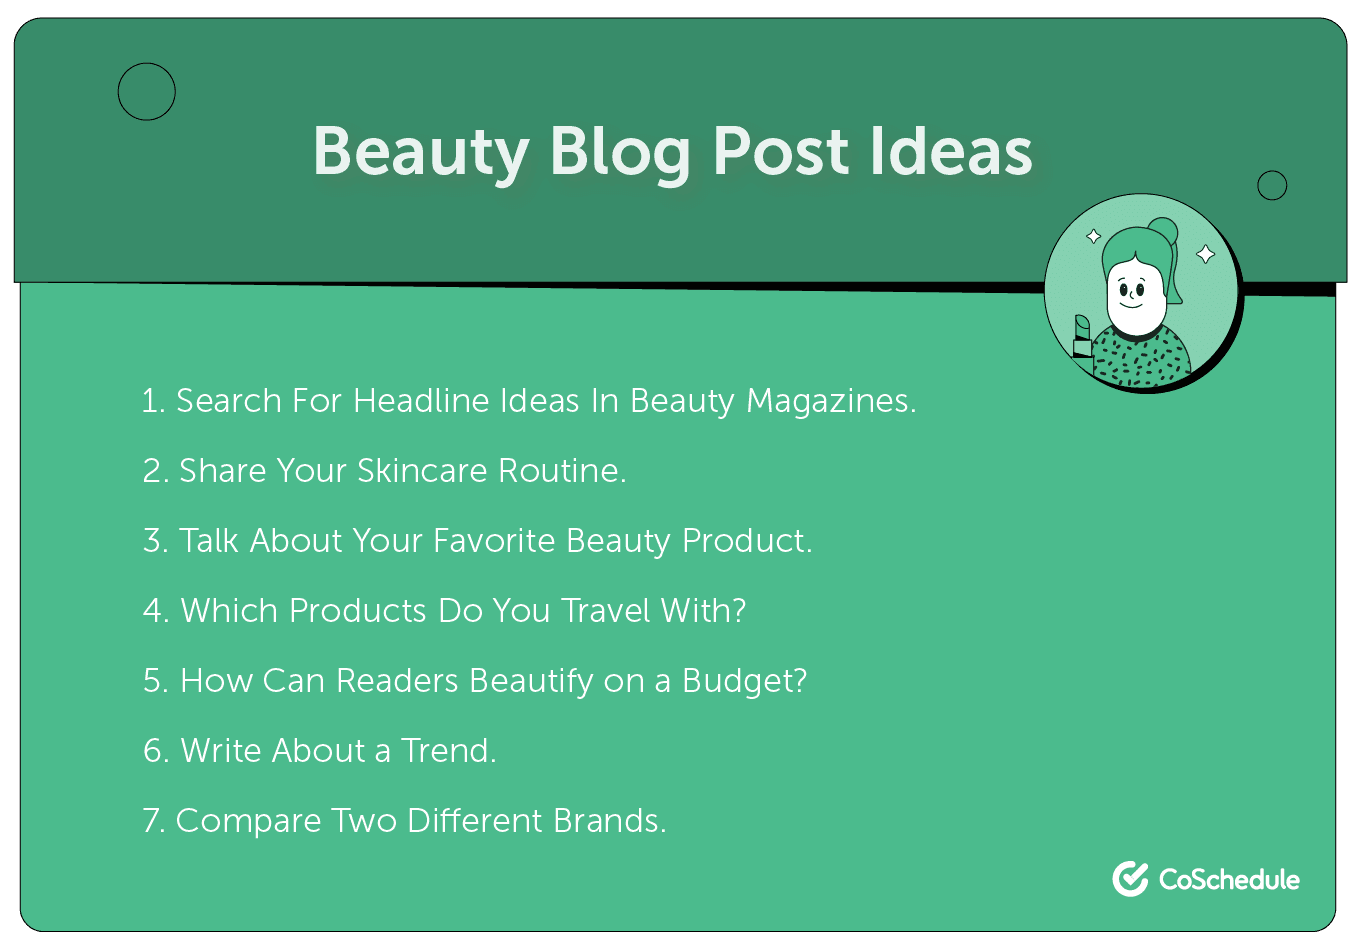 5 Ways To Write Better Blog Posts